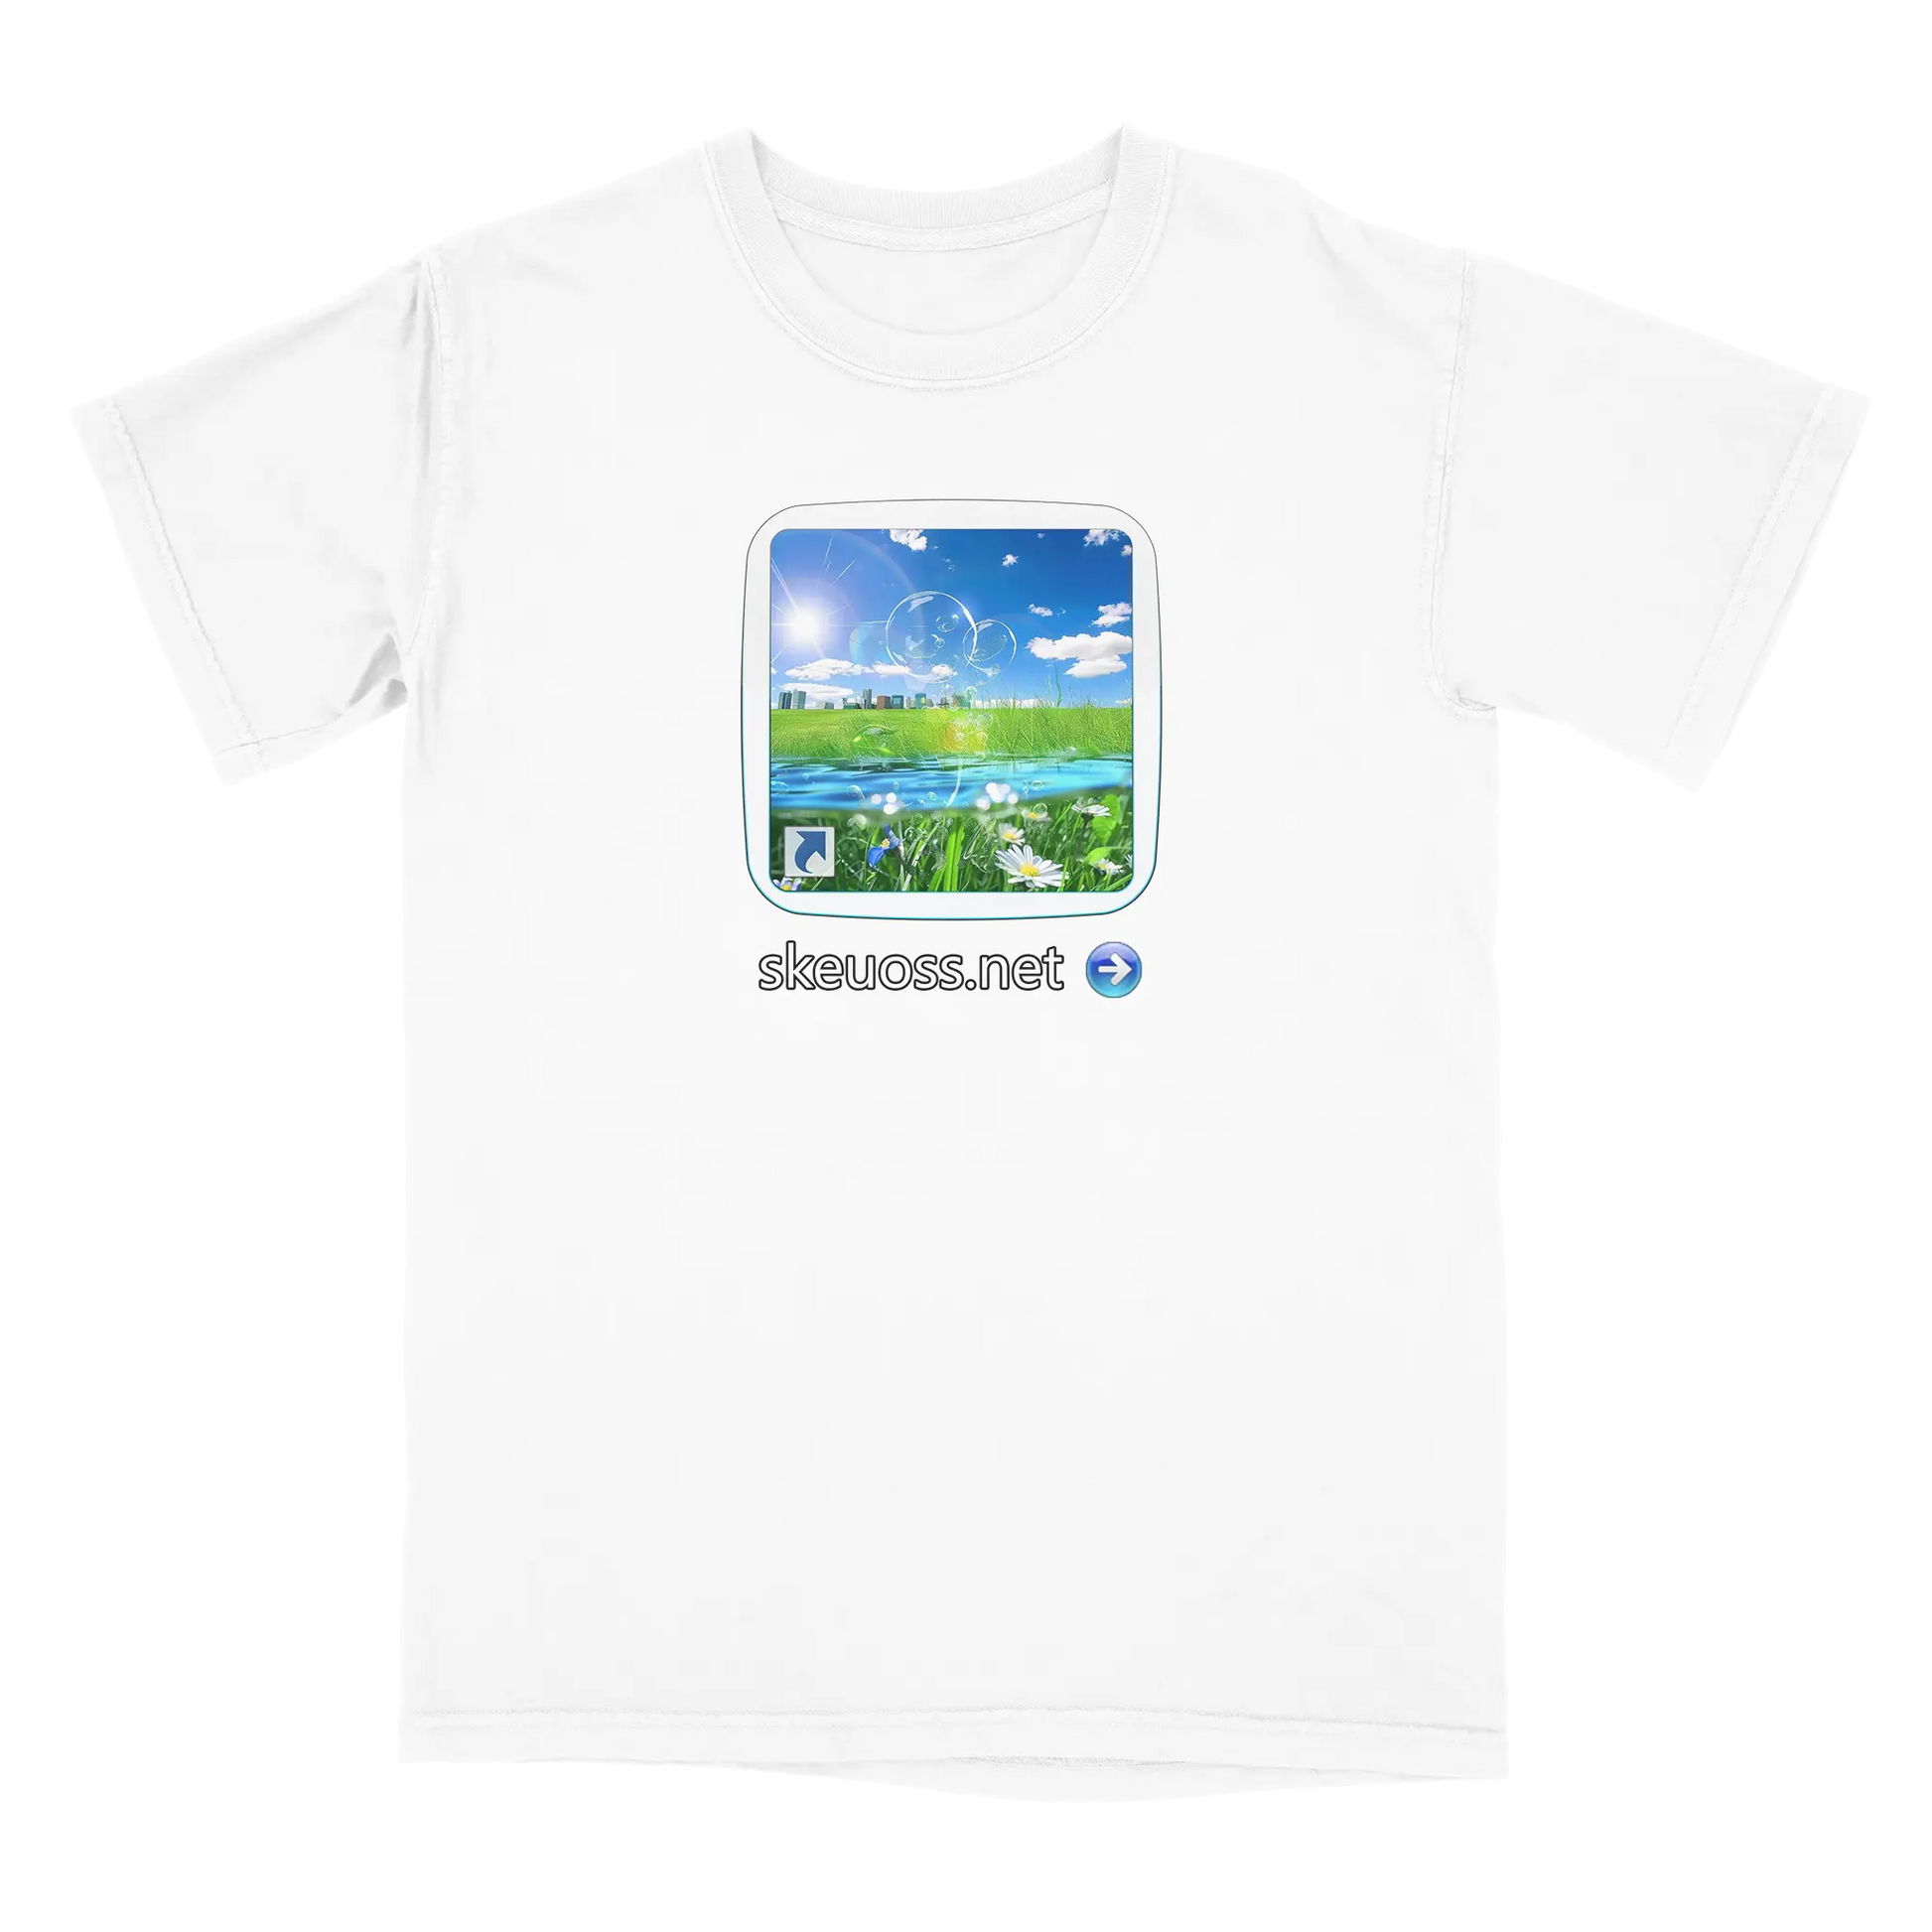 Frutiger Aero T-shirt - User Login Collection - User 219